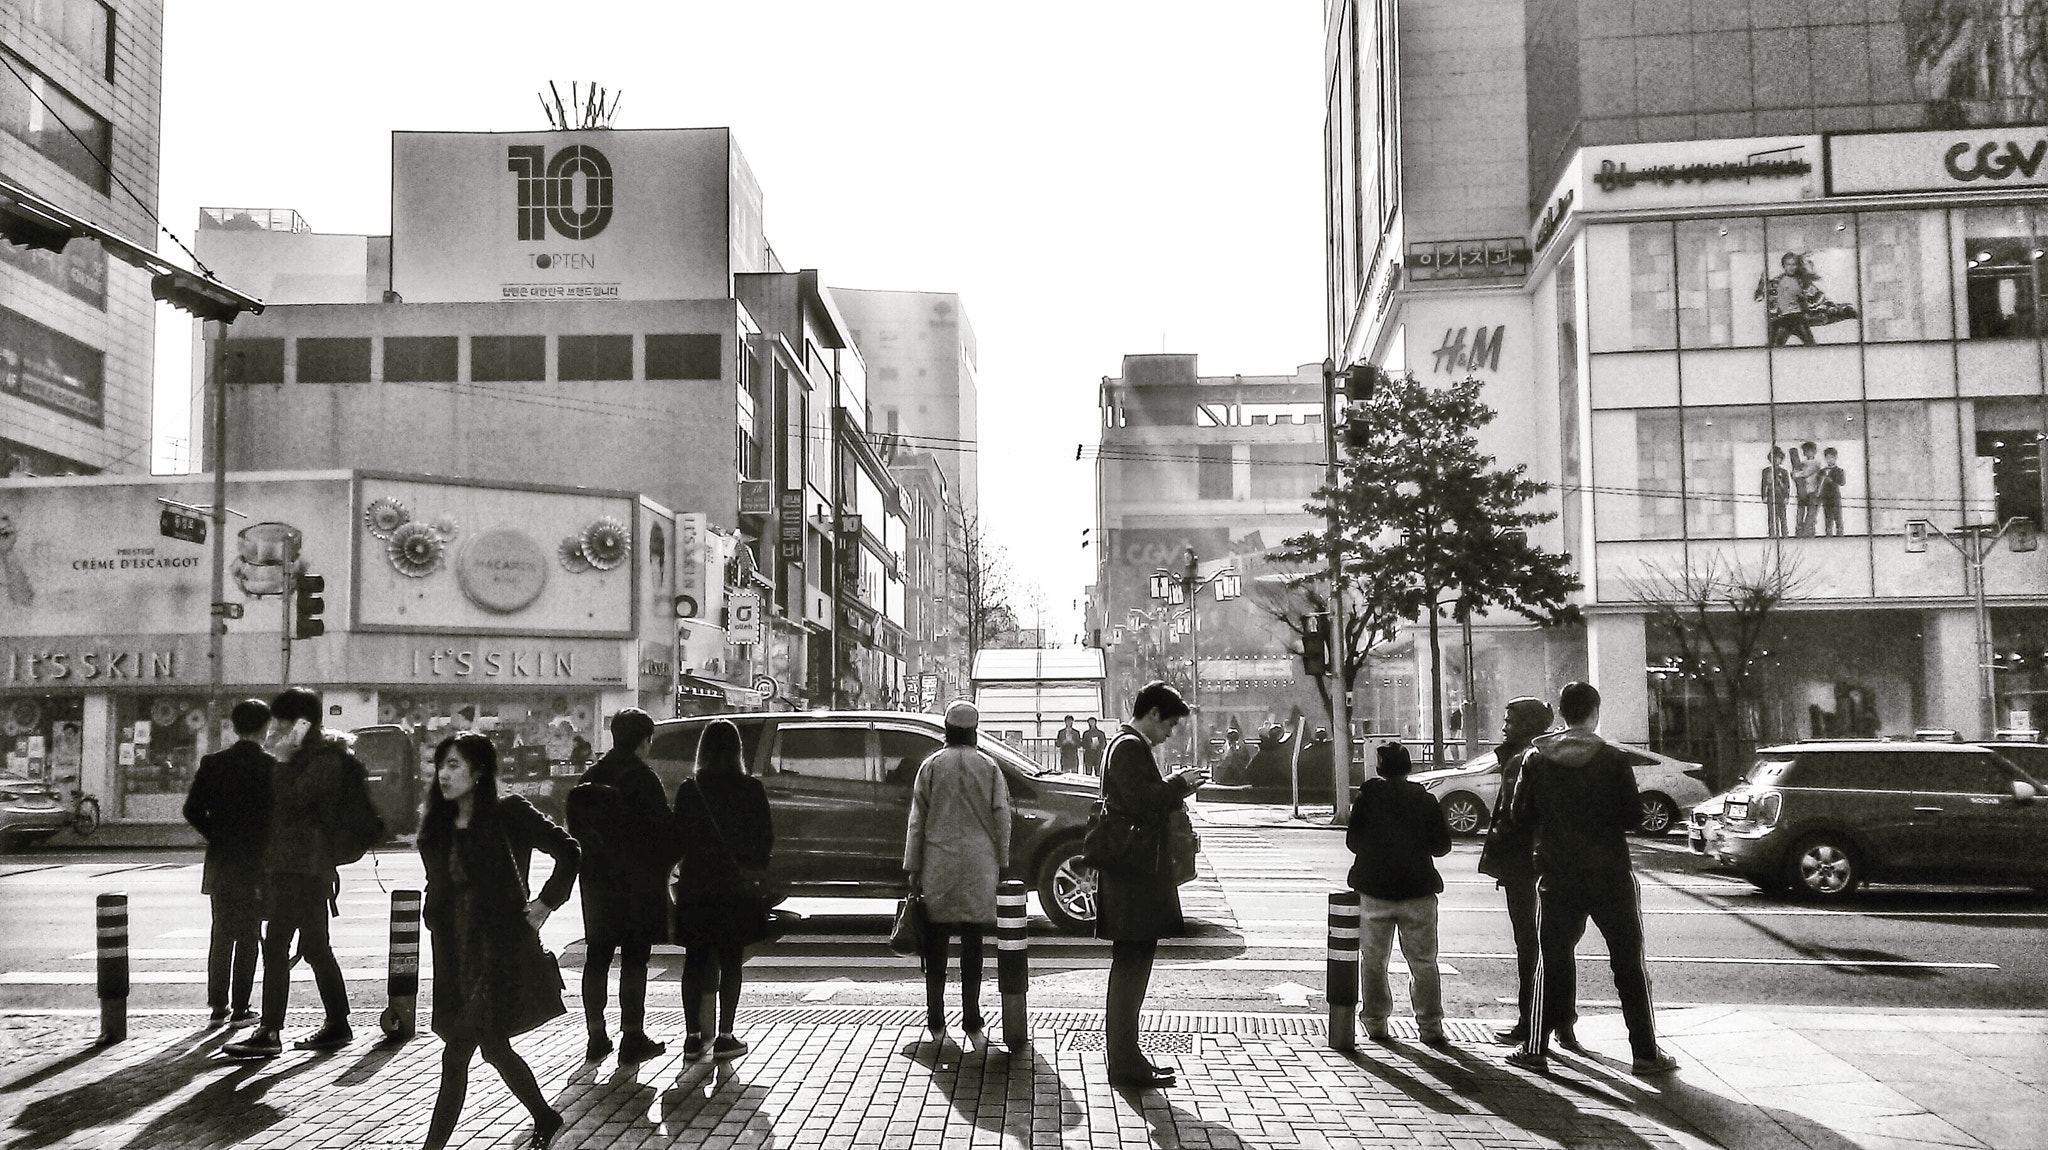 LG G3 Beat sample photo. Downtown daegu, photography